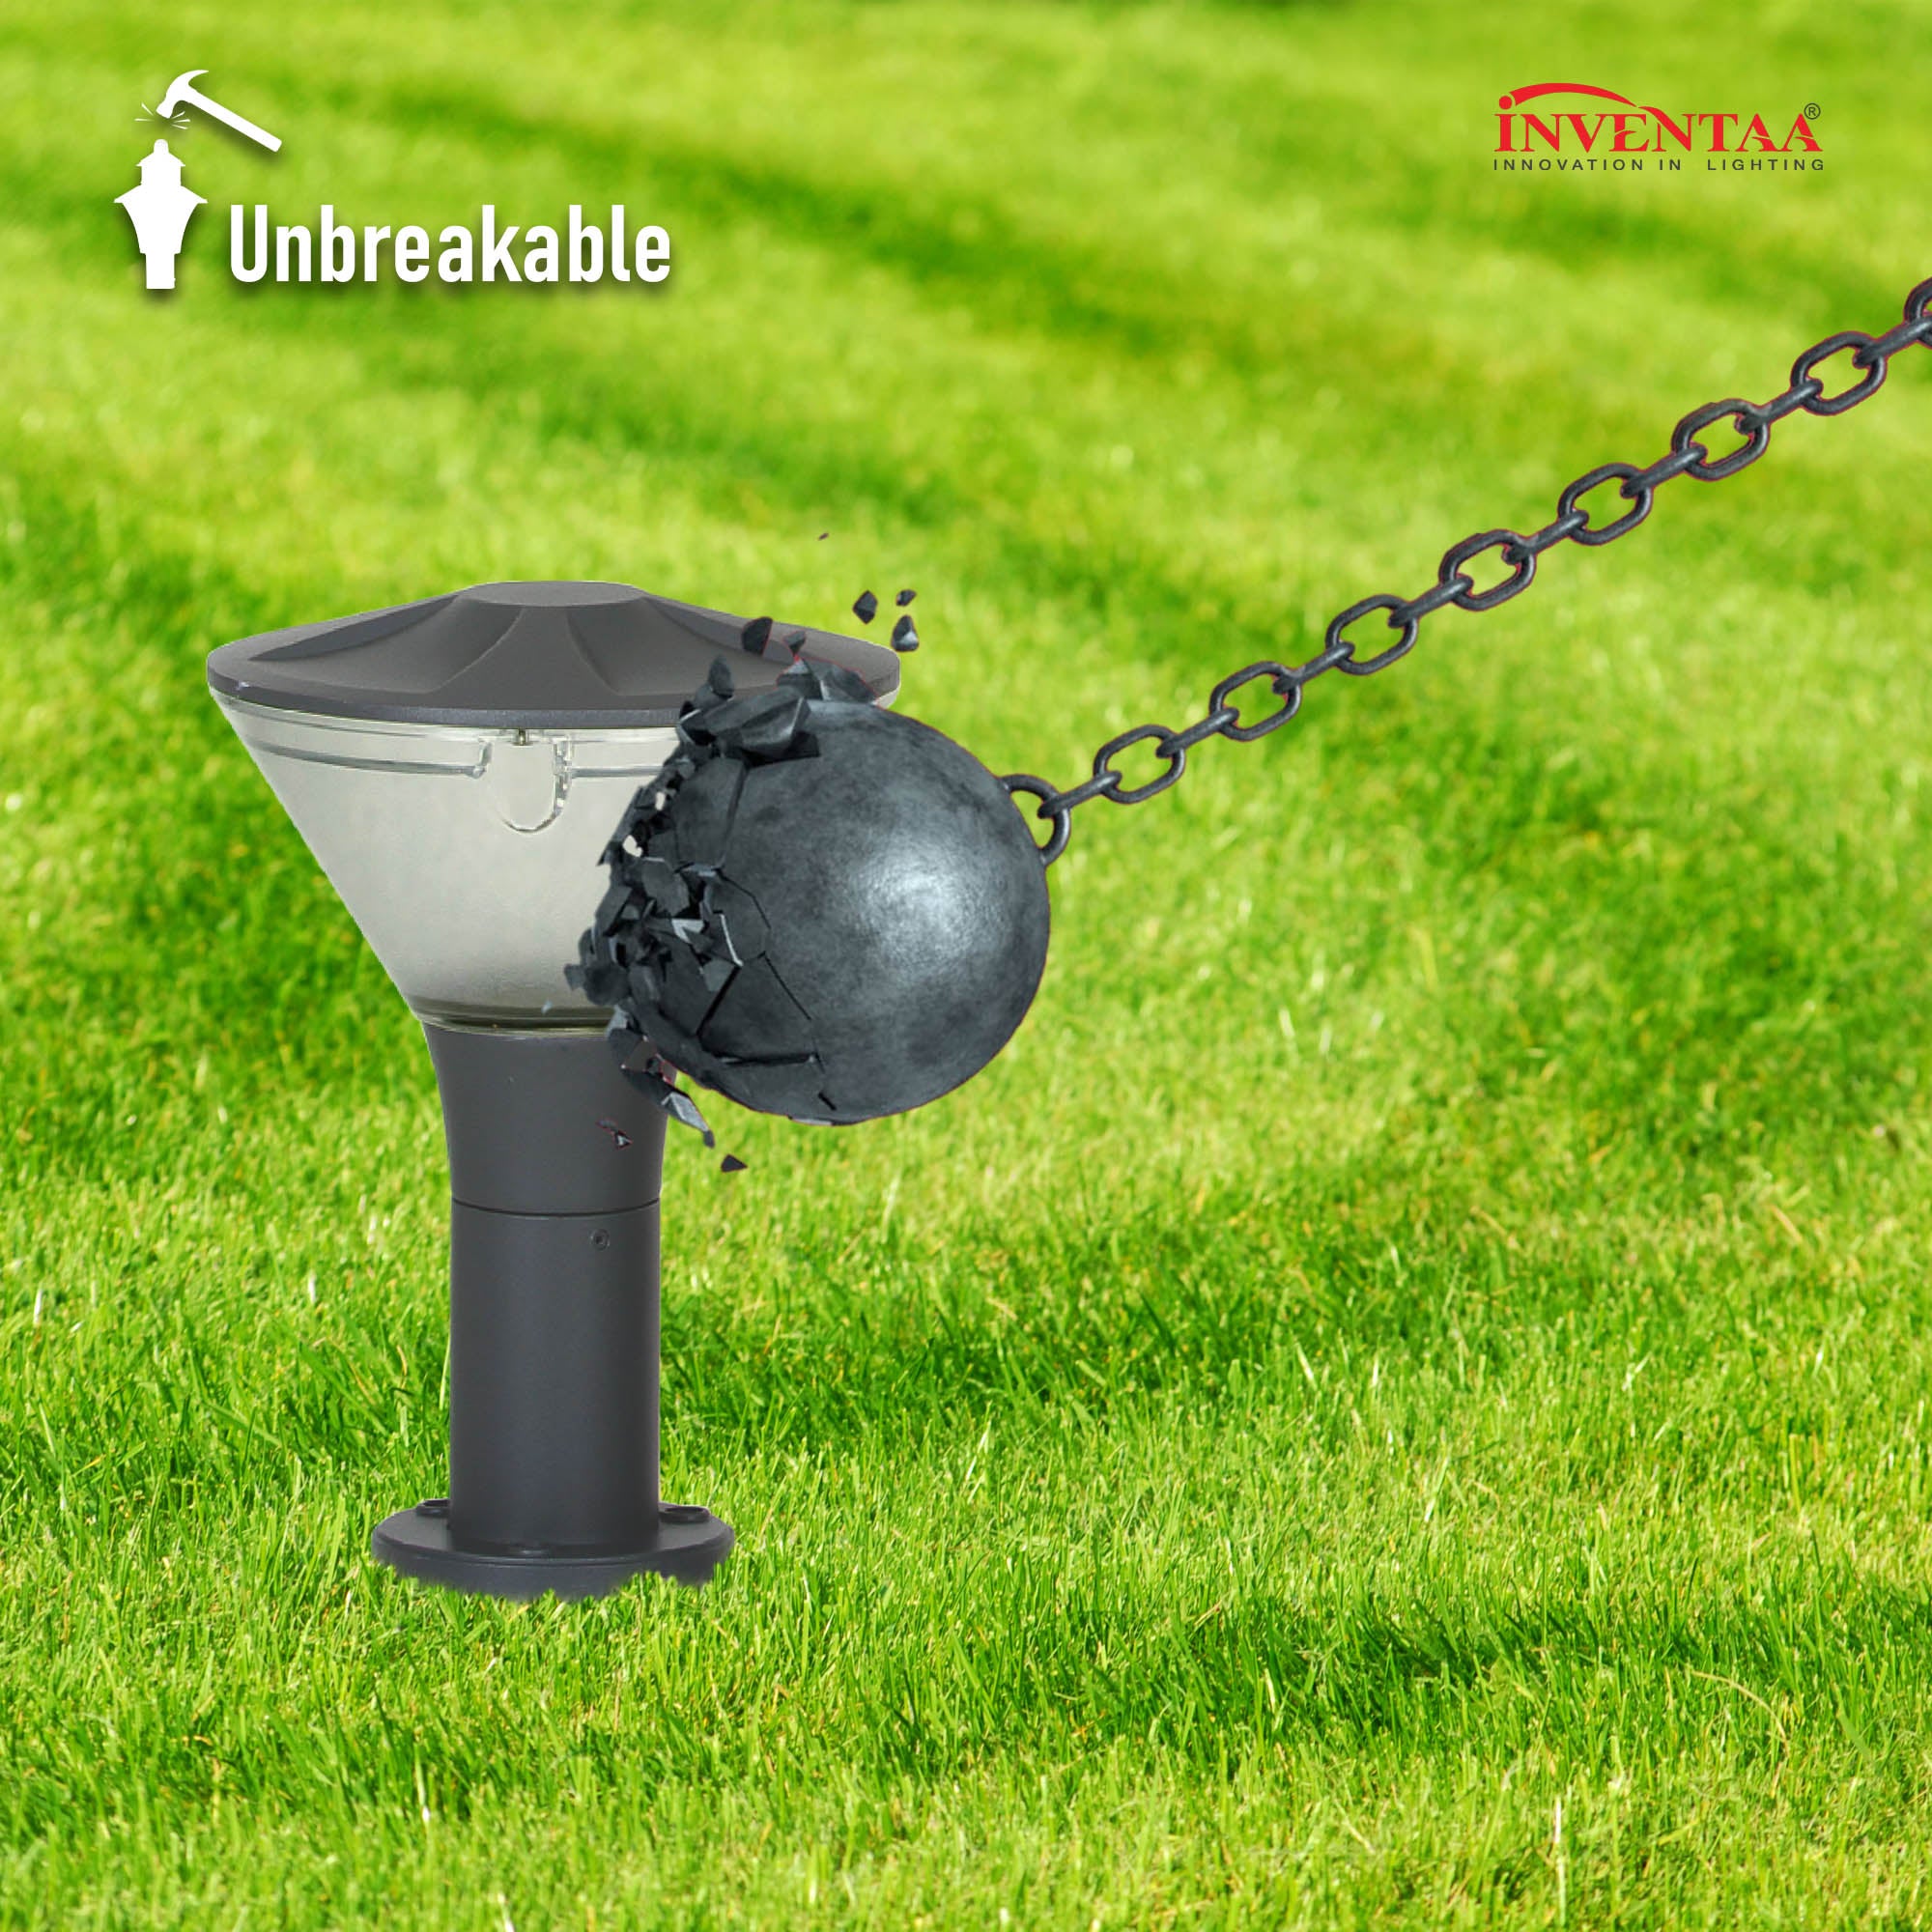 Yash 2 feet led garden bollard light featuring its unbreakable design for durability #size_2 feet